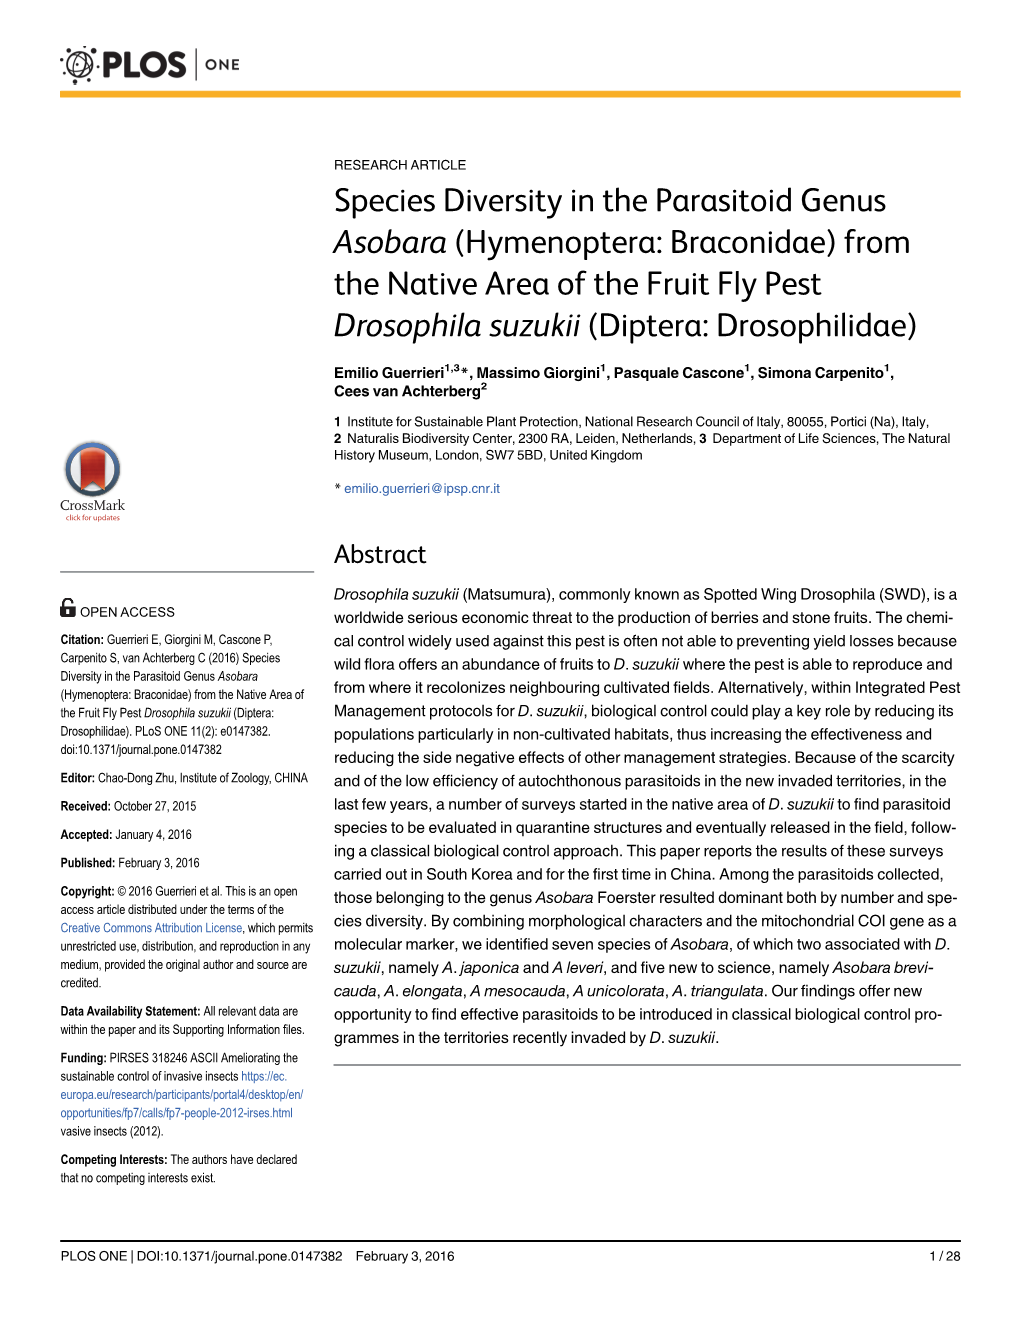 Species Diversity in the Parasitoid Genus Asobara (Hymenoptera: Braconidae) from the Native Area of the Fruit Fly Pest Drosophila Suzukii (Diptera: Drosophilidae)